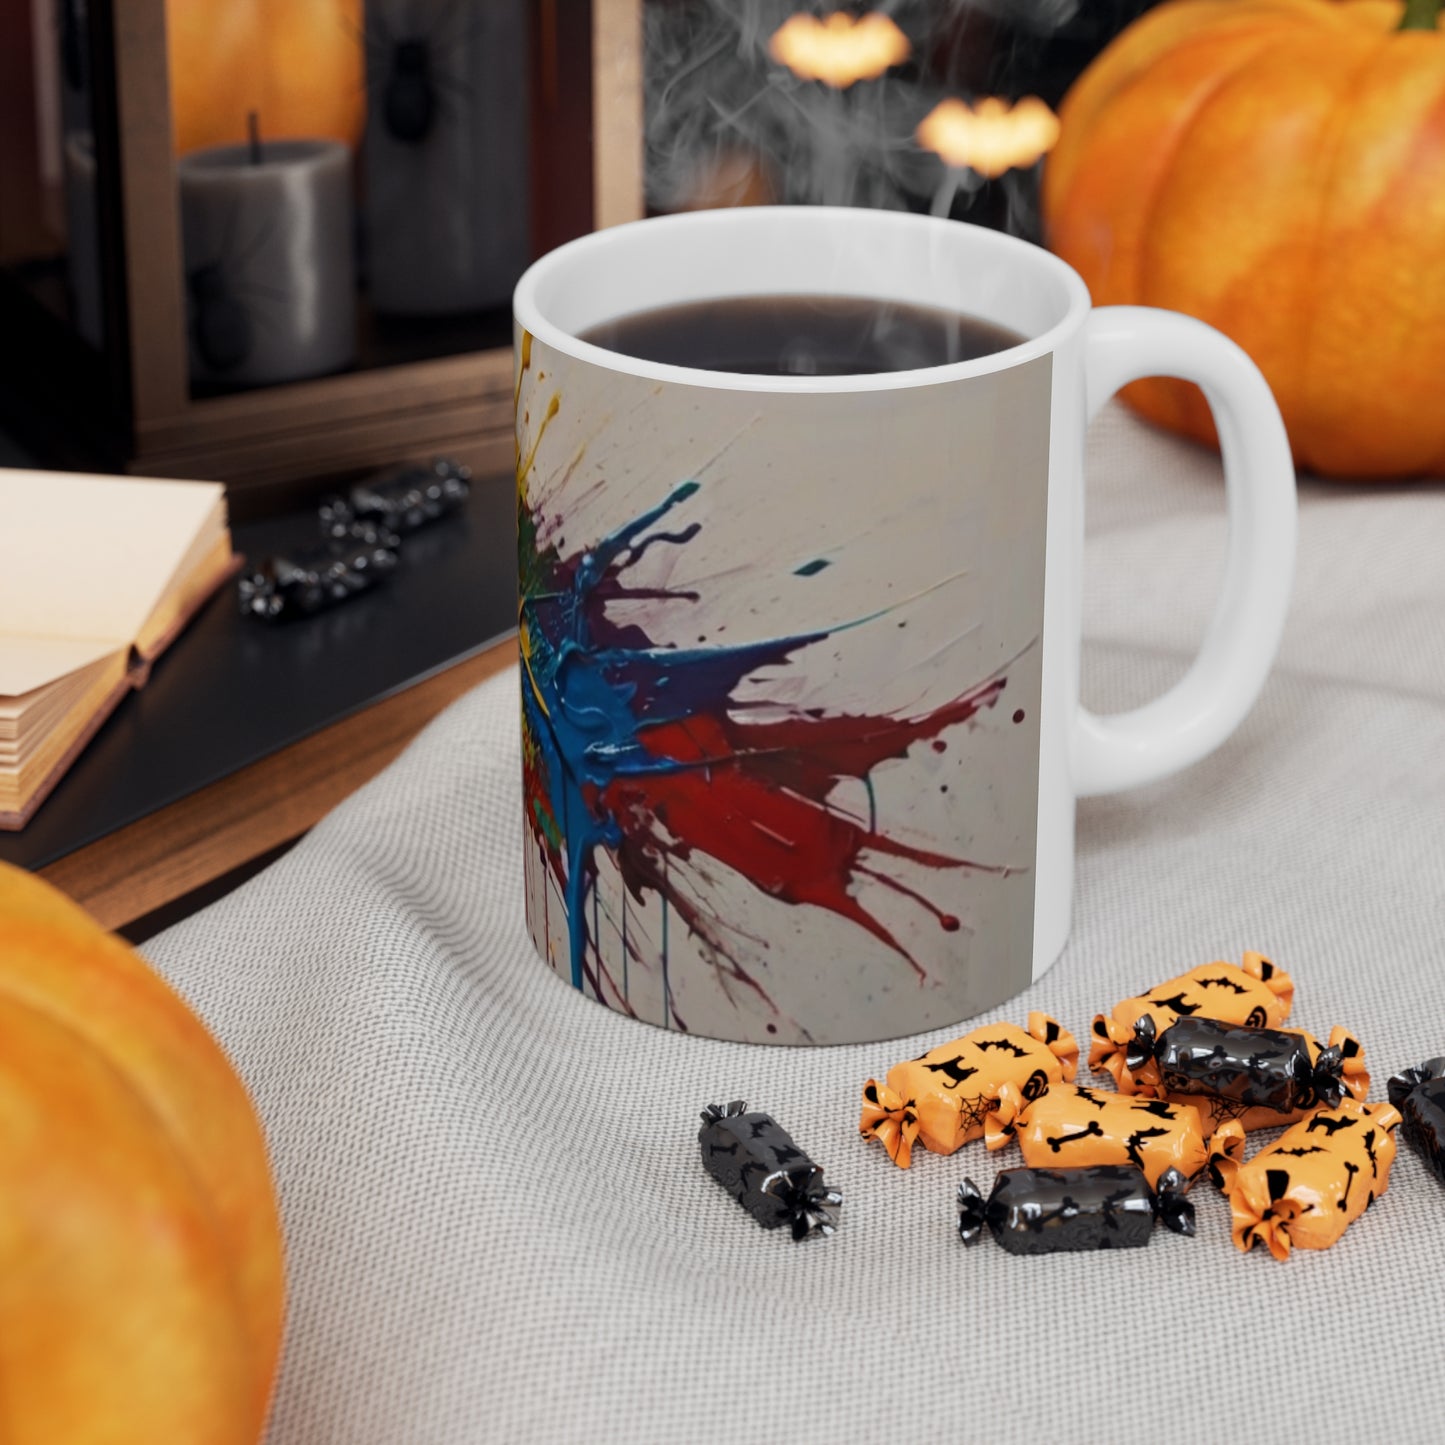 Messy Paint Splatter Mug - Ceramic Coffee Mug 11oz